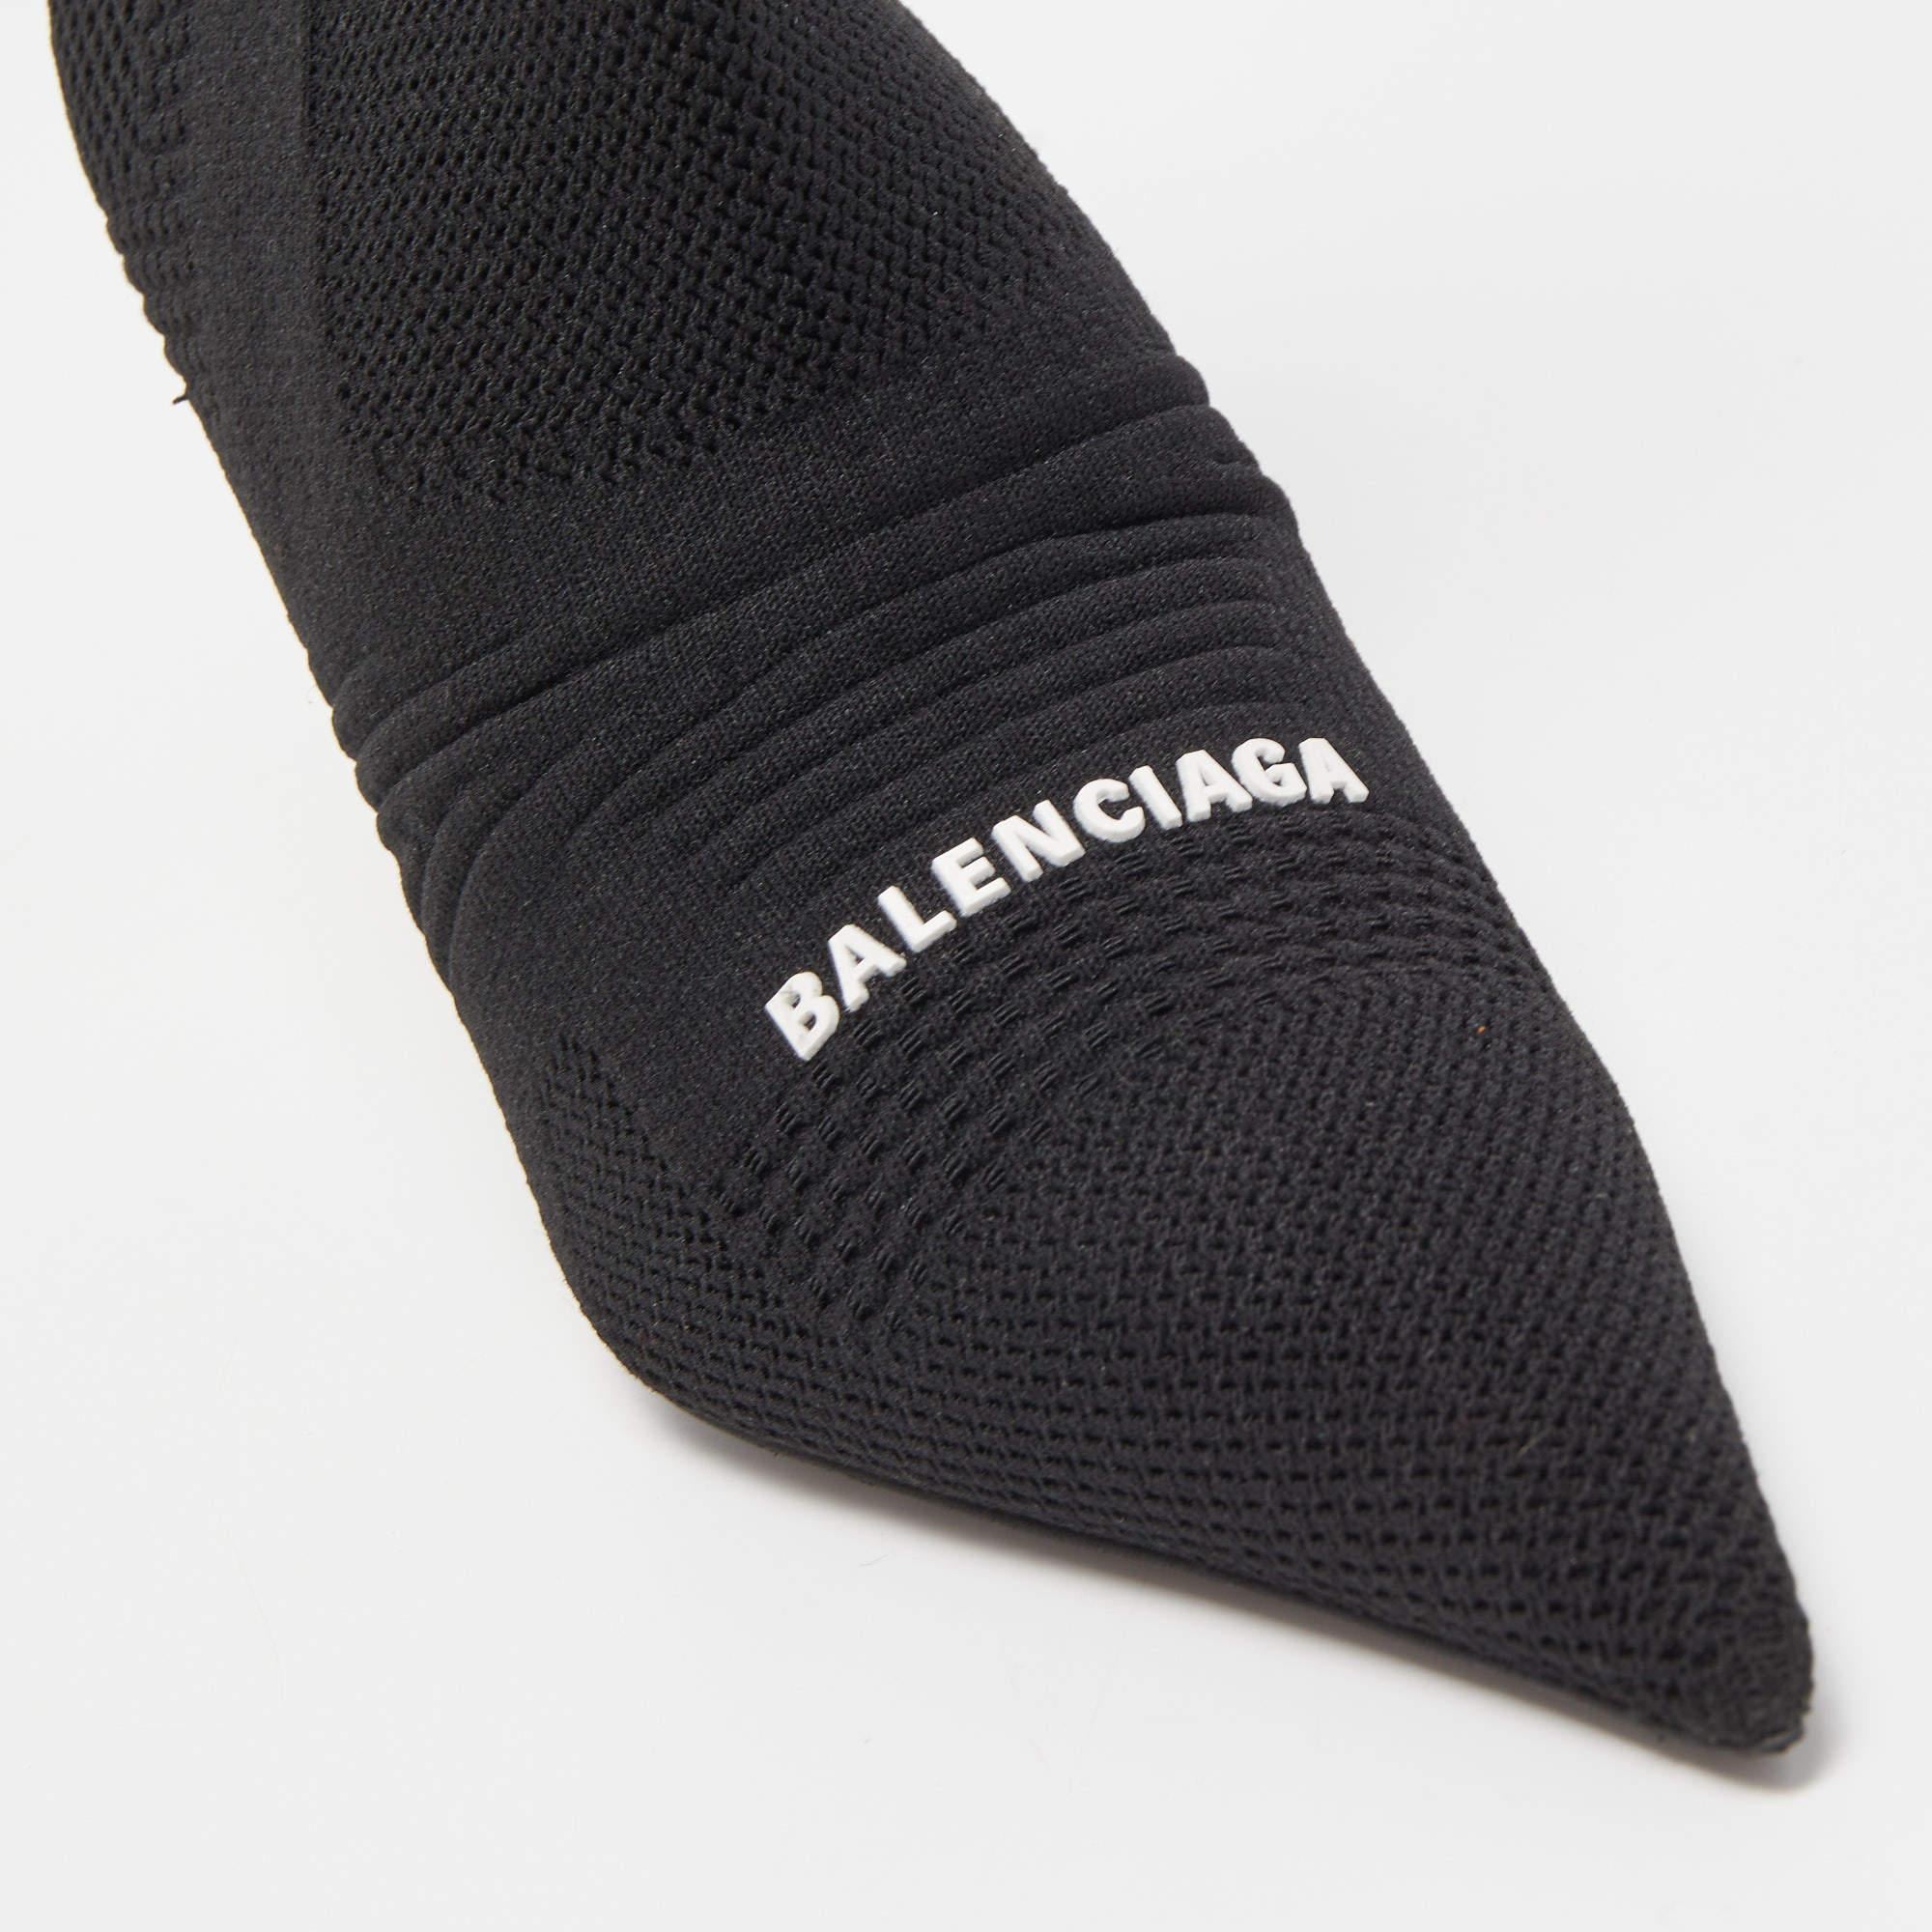 Balenciaga Black Knit Fabric Knife Ankle Socks Booties Size 38 2